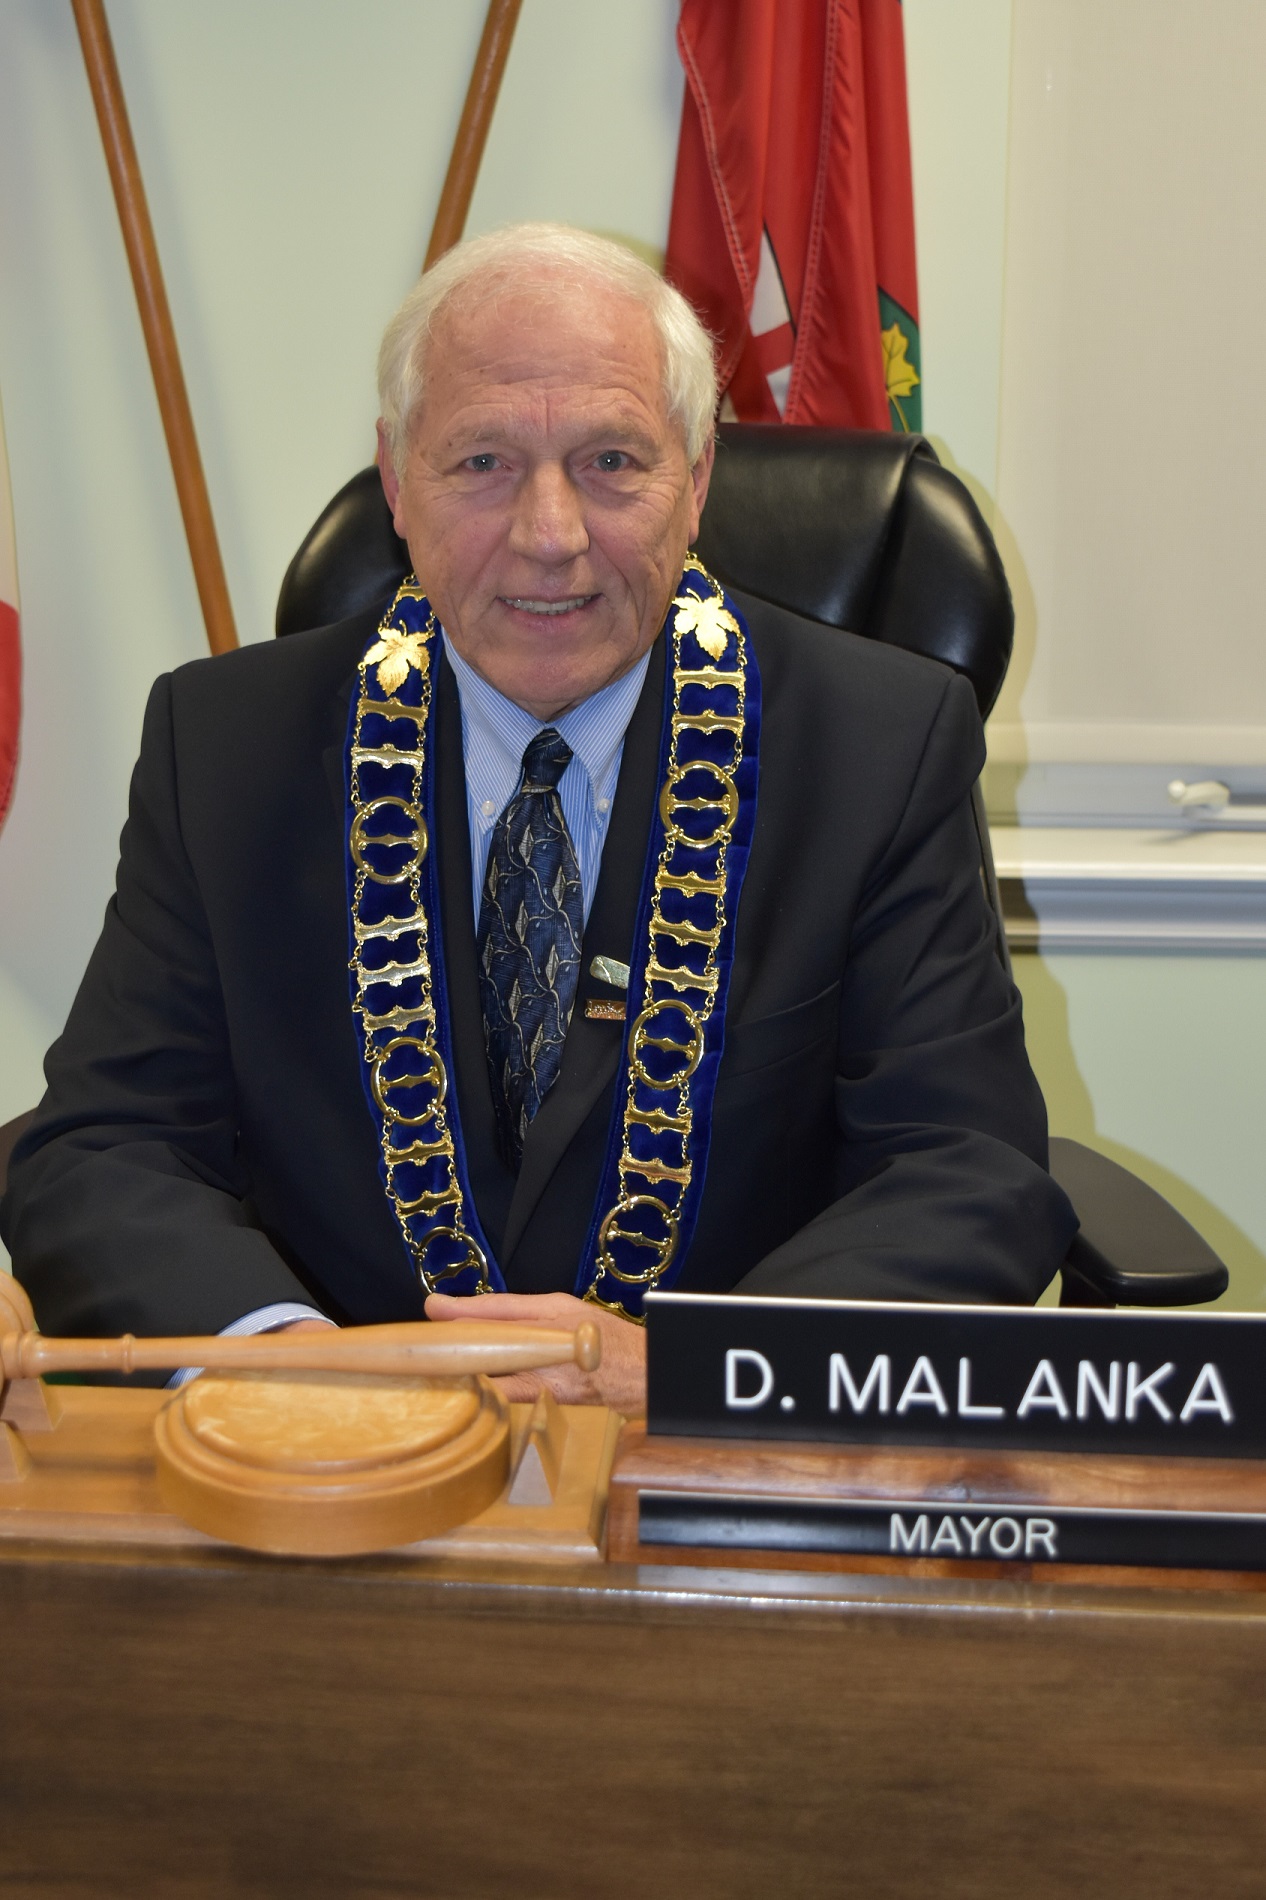 doug malanka in his seat in the council chambers